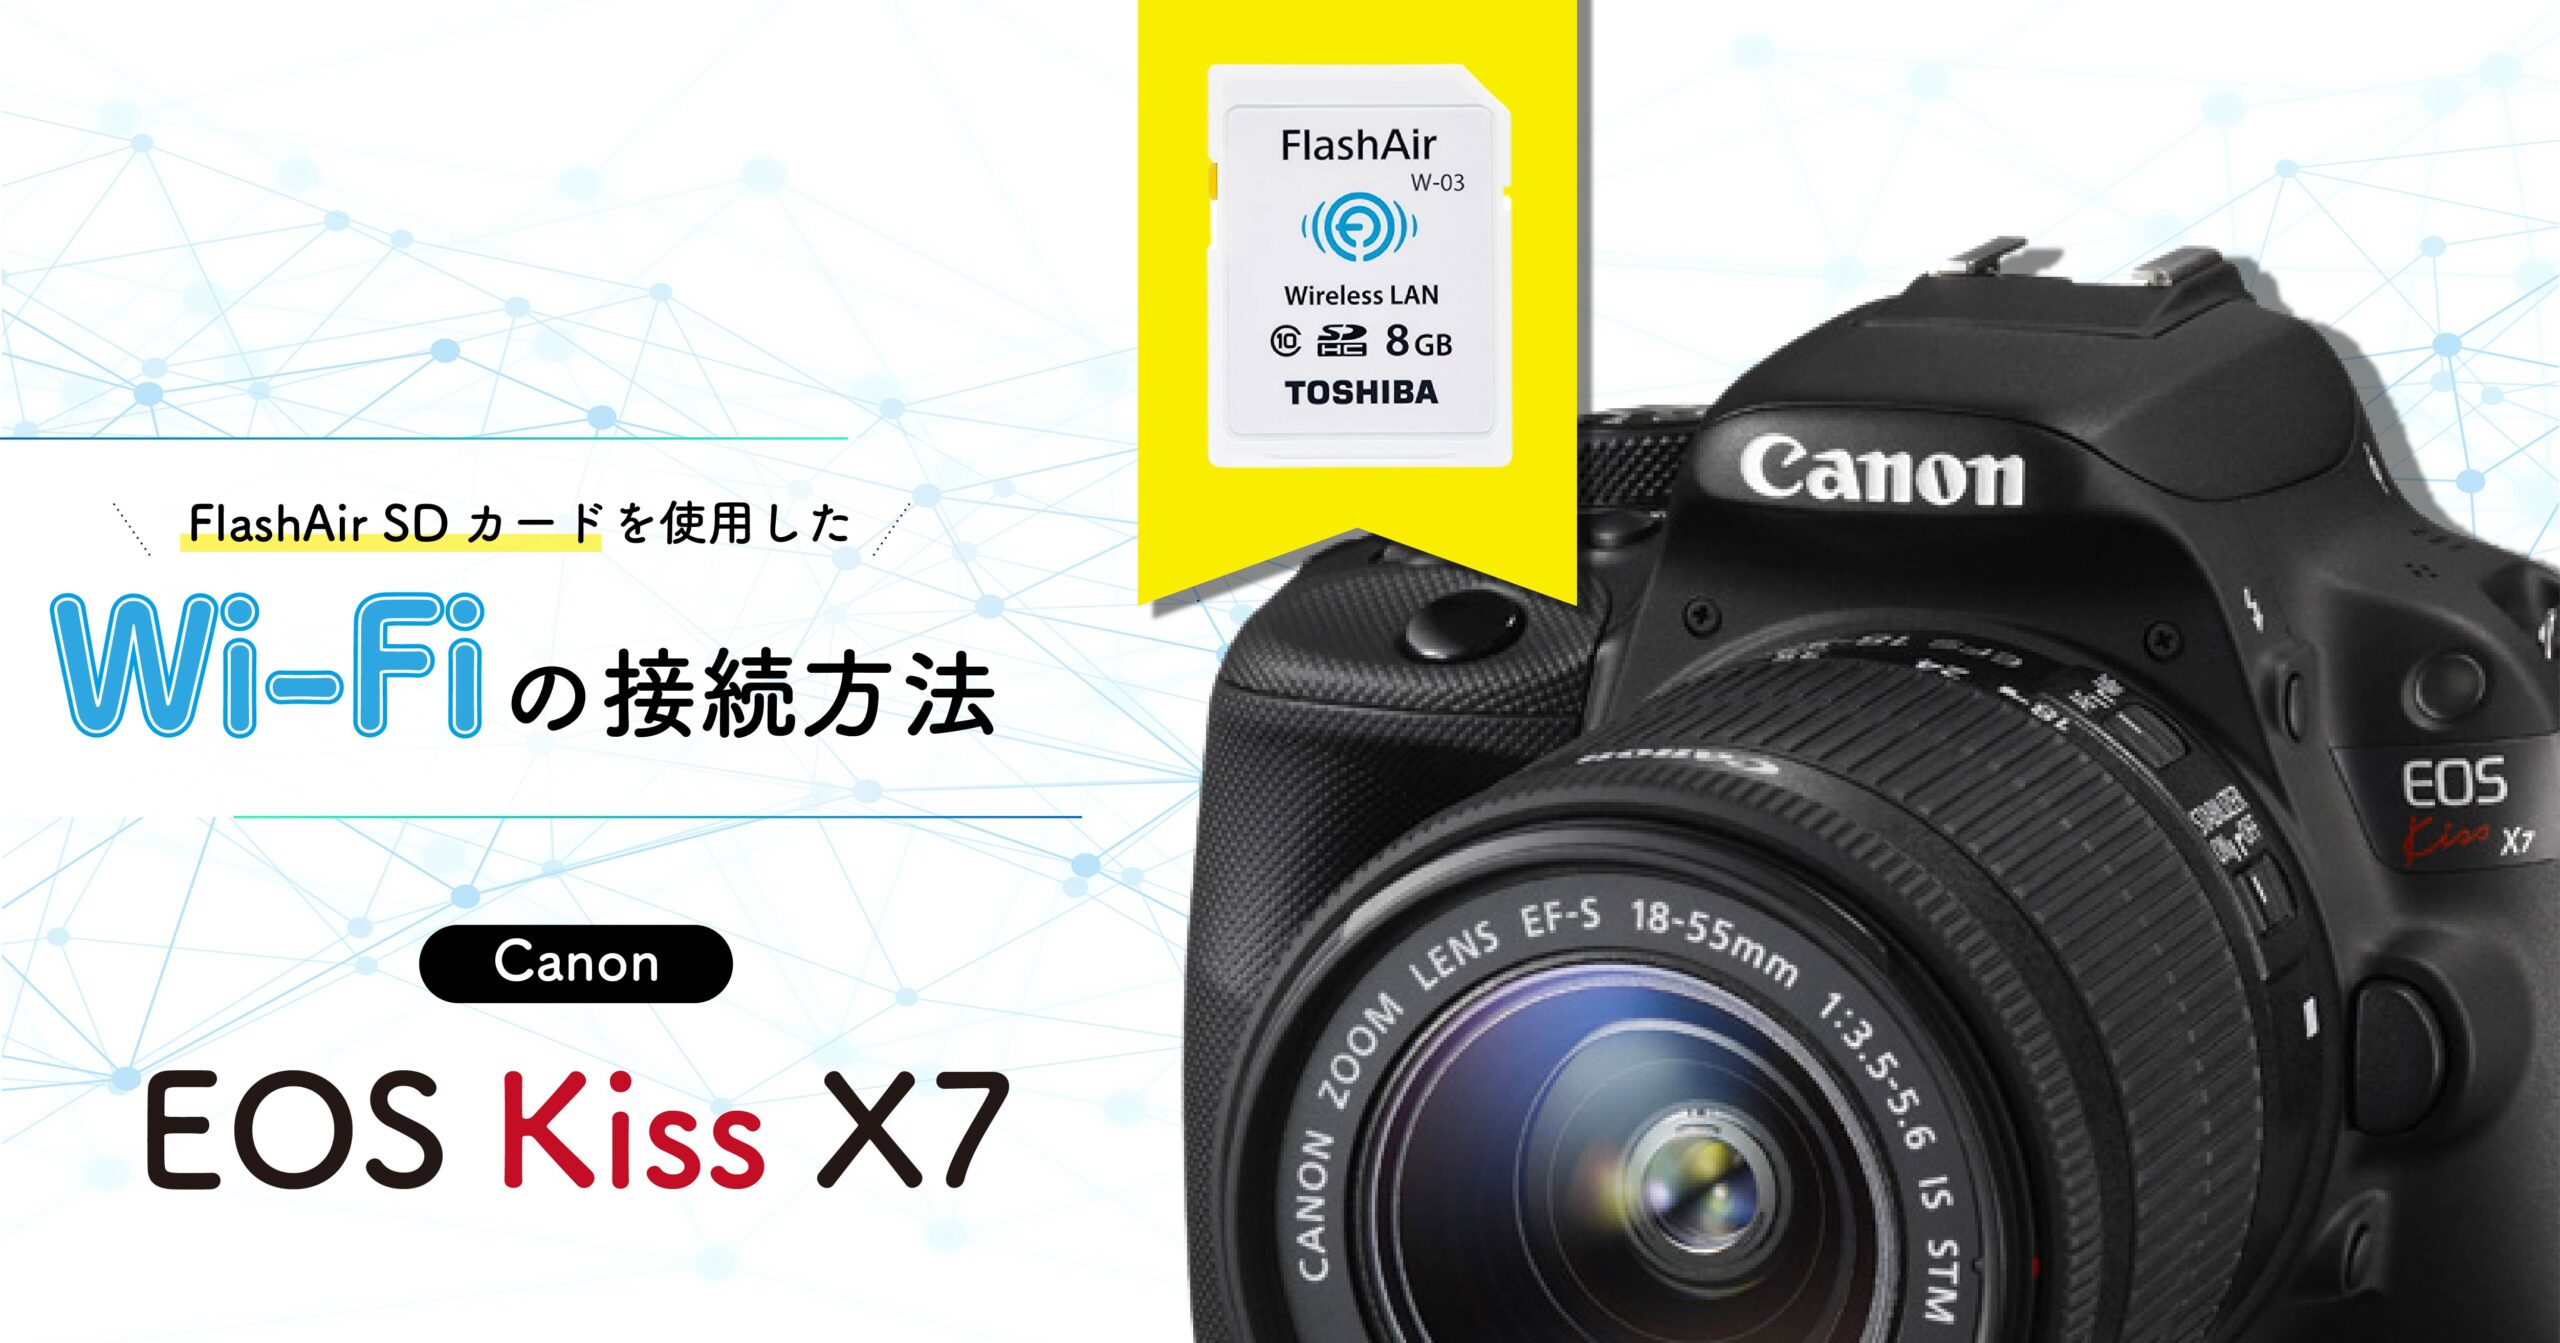 Canon EOS Kiss X7】FlashAir SDカードを使用したWi-Fiの接続方法 